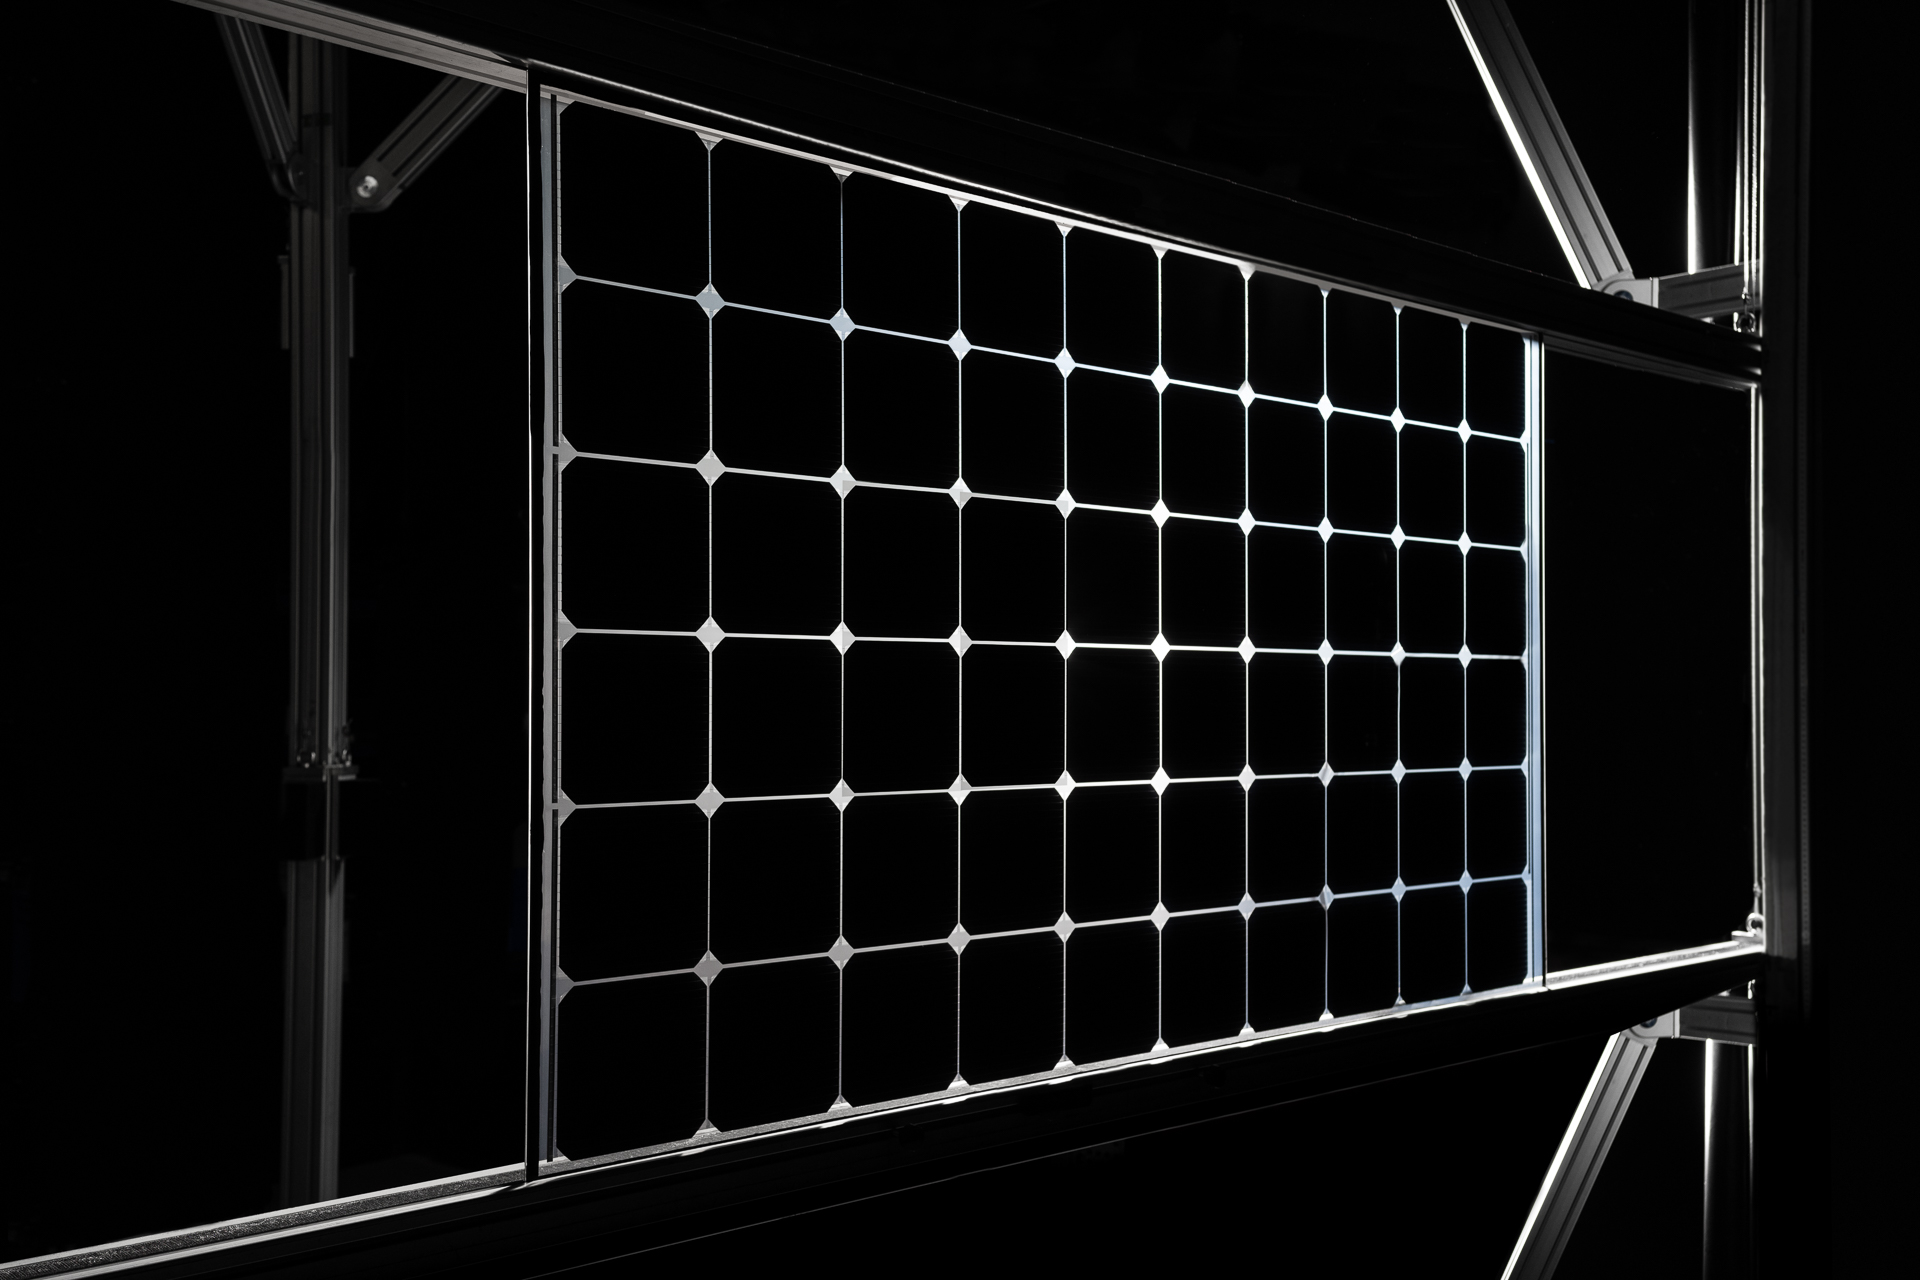 BiFacial Solar Panel in a sun simulator